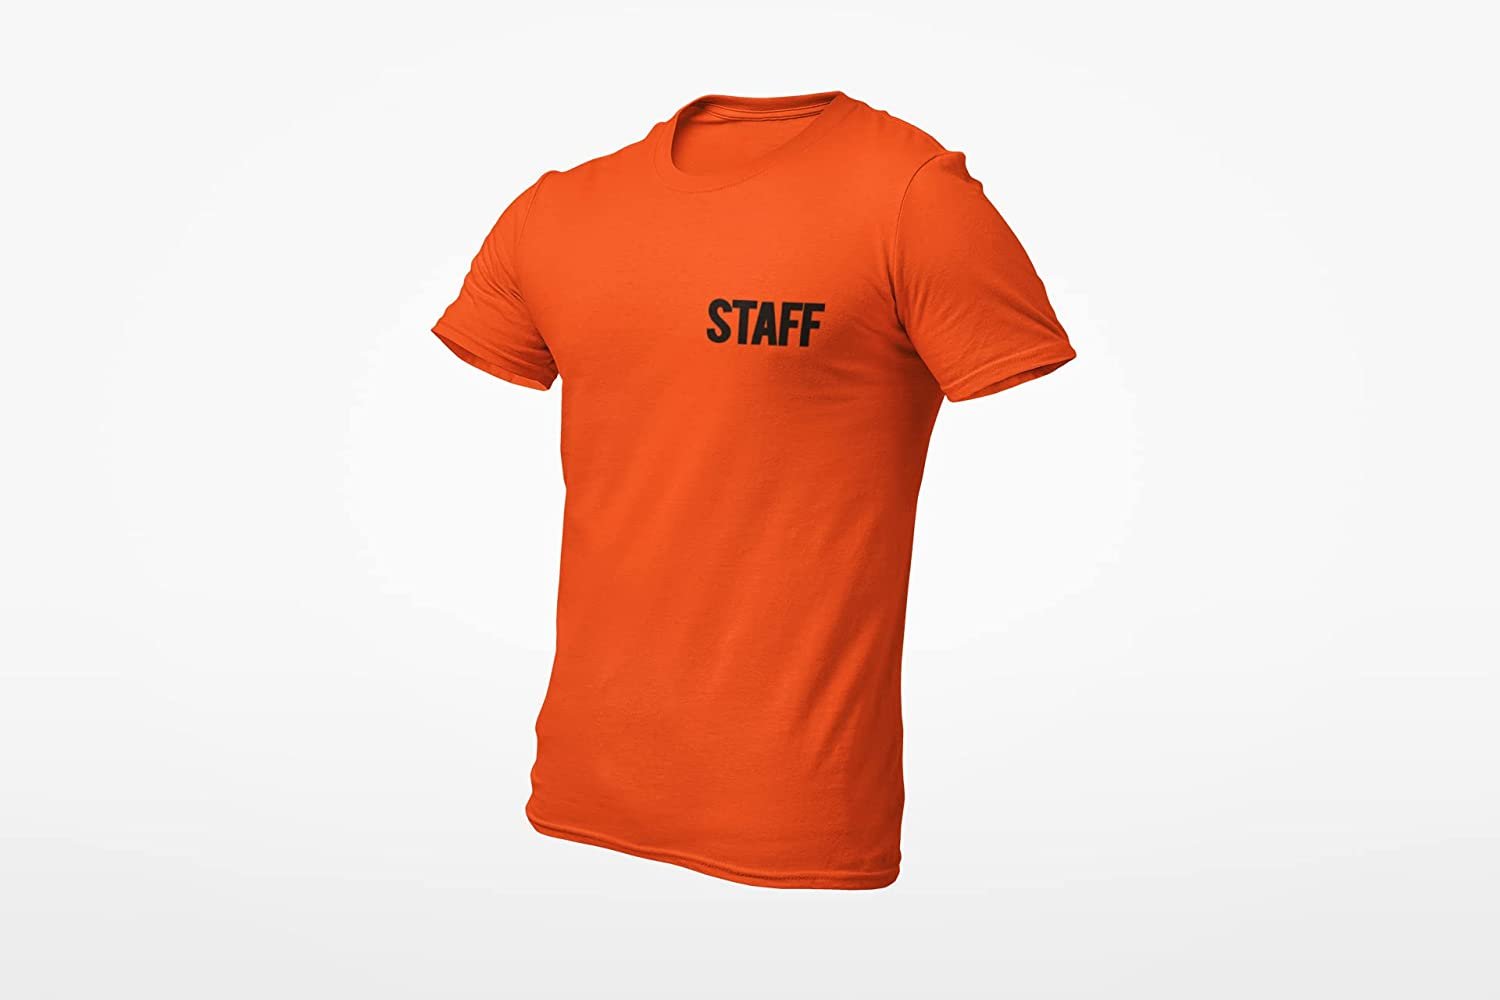 Men's Staff T-Shirt Screen Print Tee (Chest & Back Print, Orange)